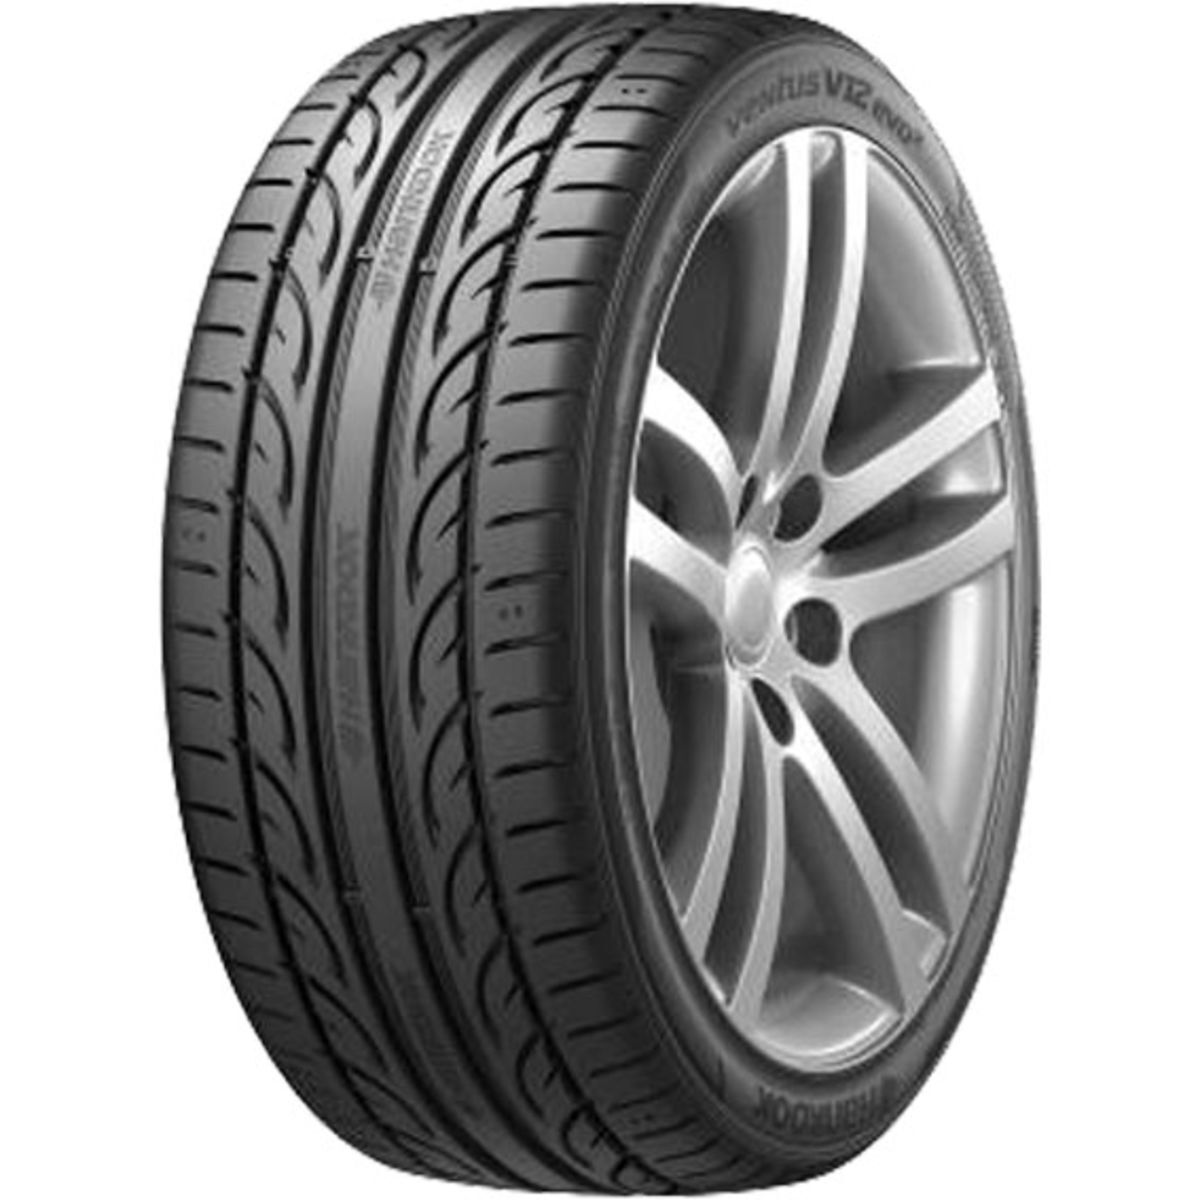 Neumáticos de verano HANKOOK Ventus V12 evo2 K120 215/40R16 XL 86W